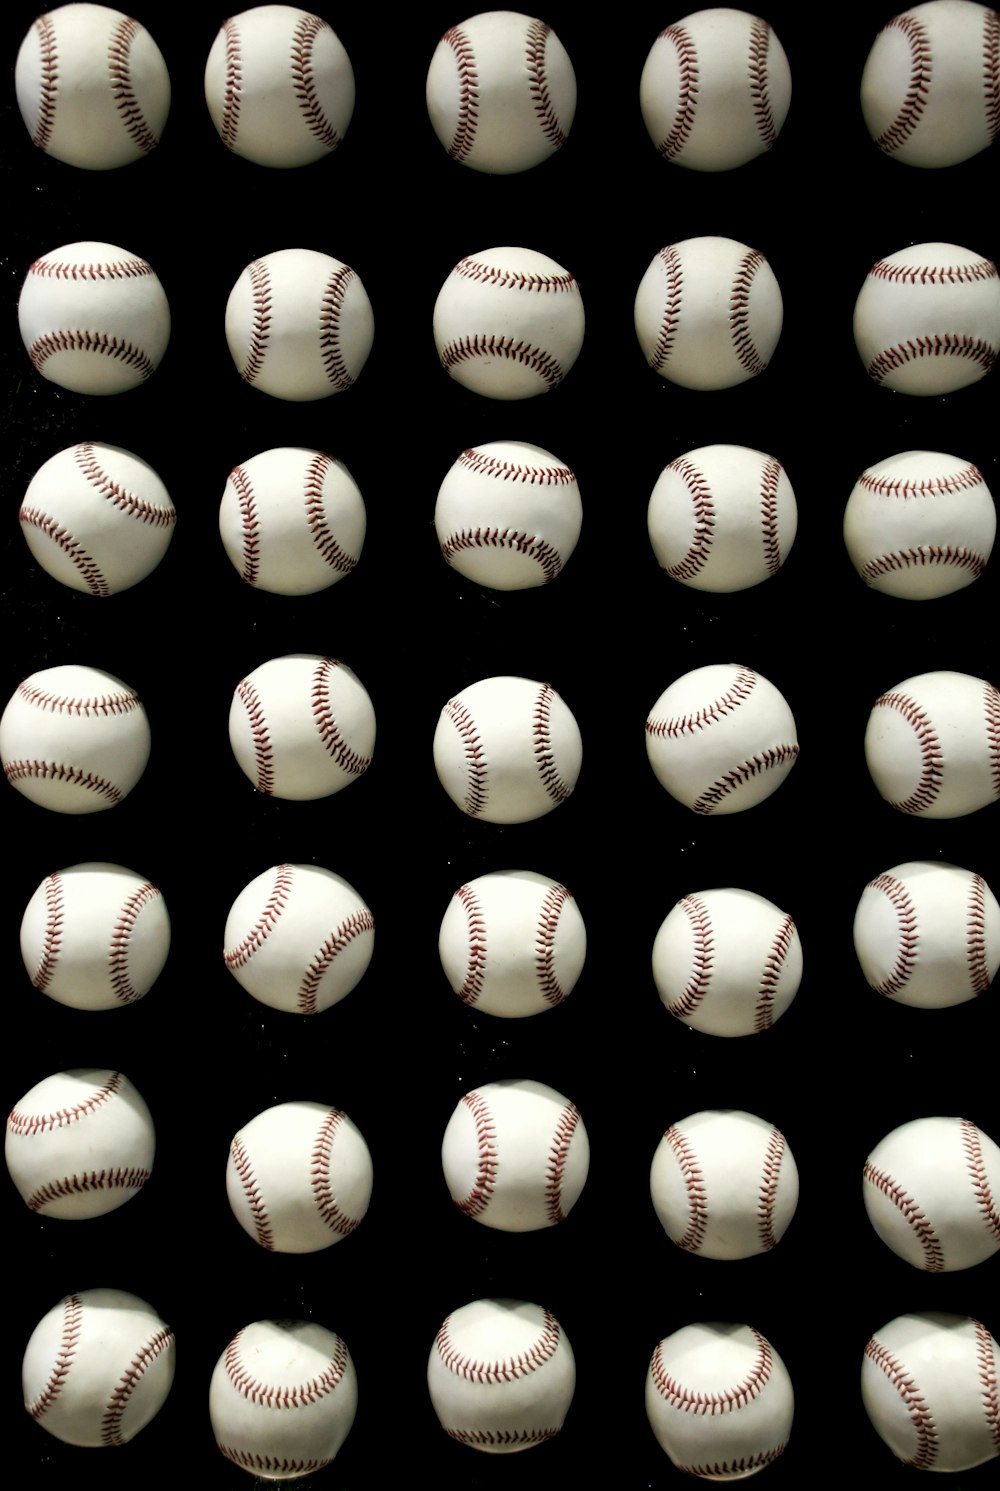 White and red baseball ball photo – Free Sport Image on Unsplash